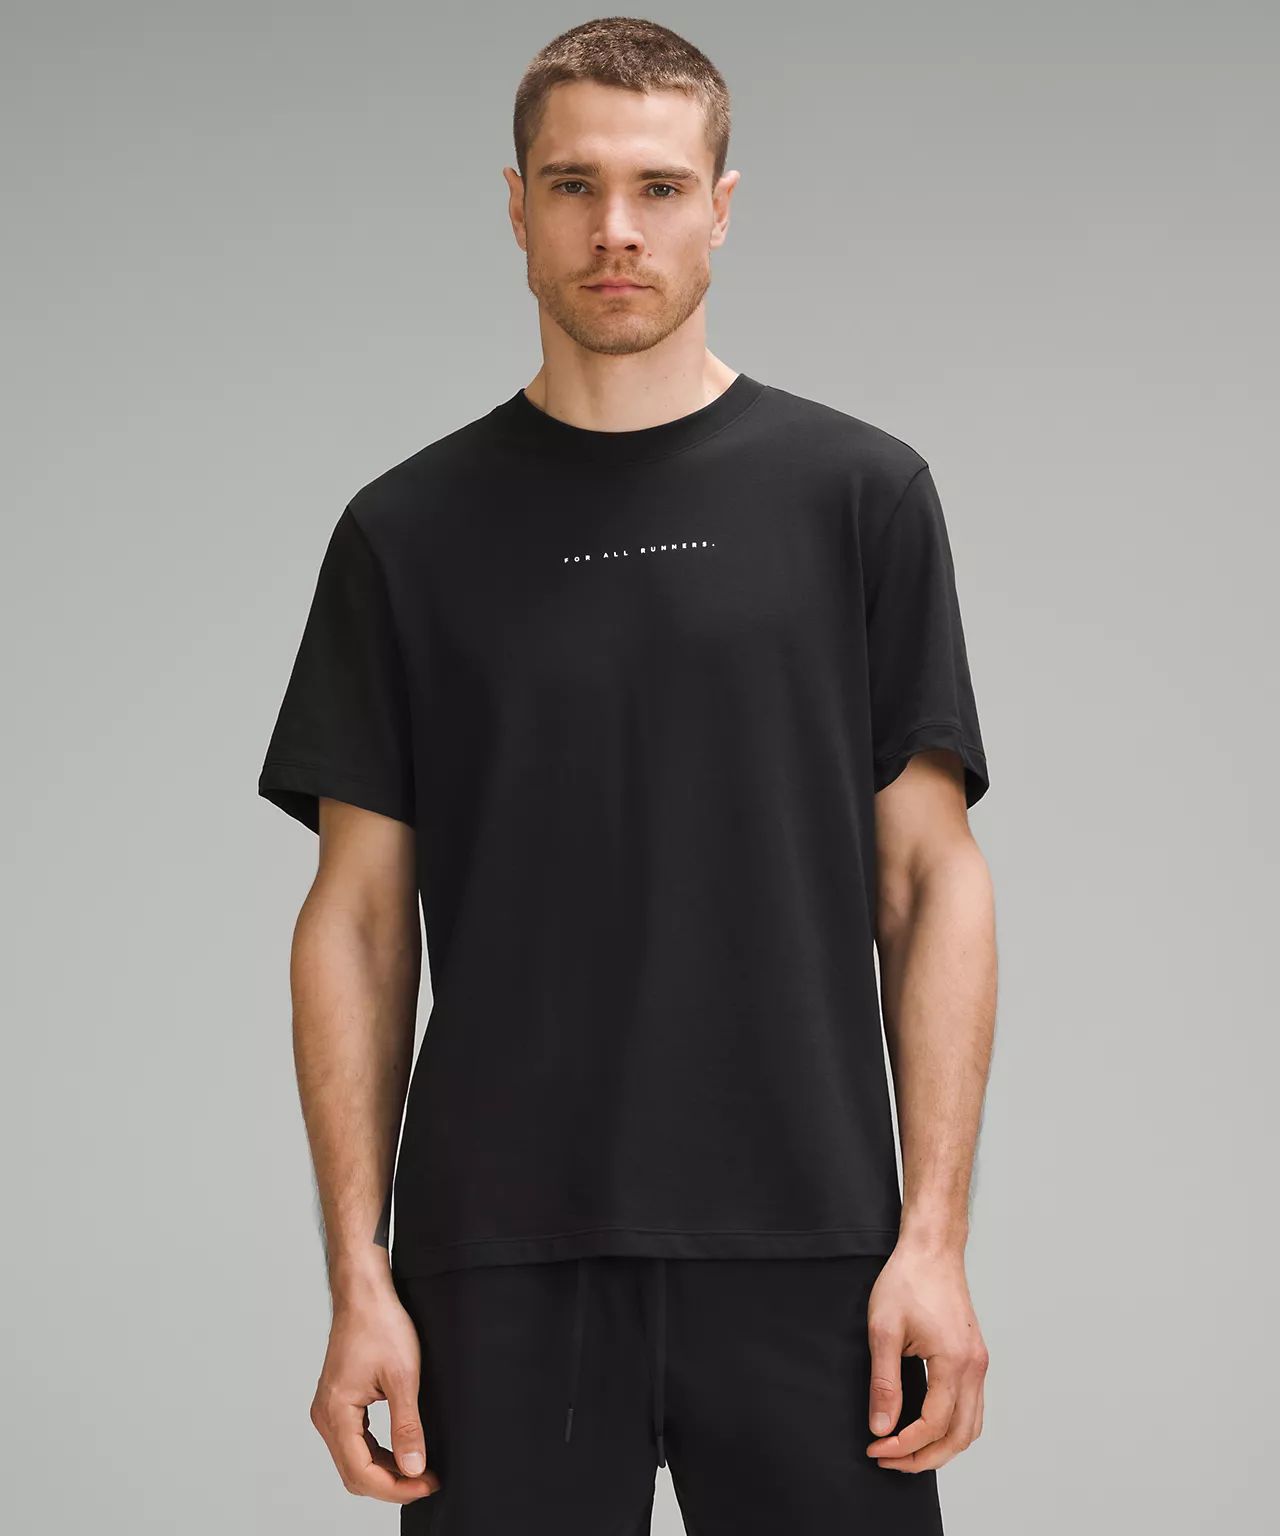 Zeroed In Short-Sleeve Shirt | Lululemon (US)